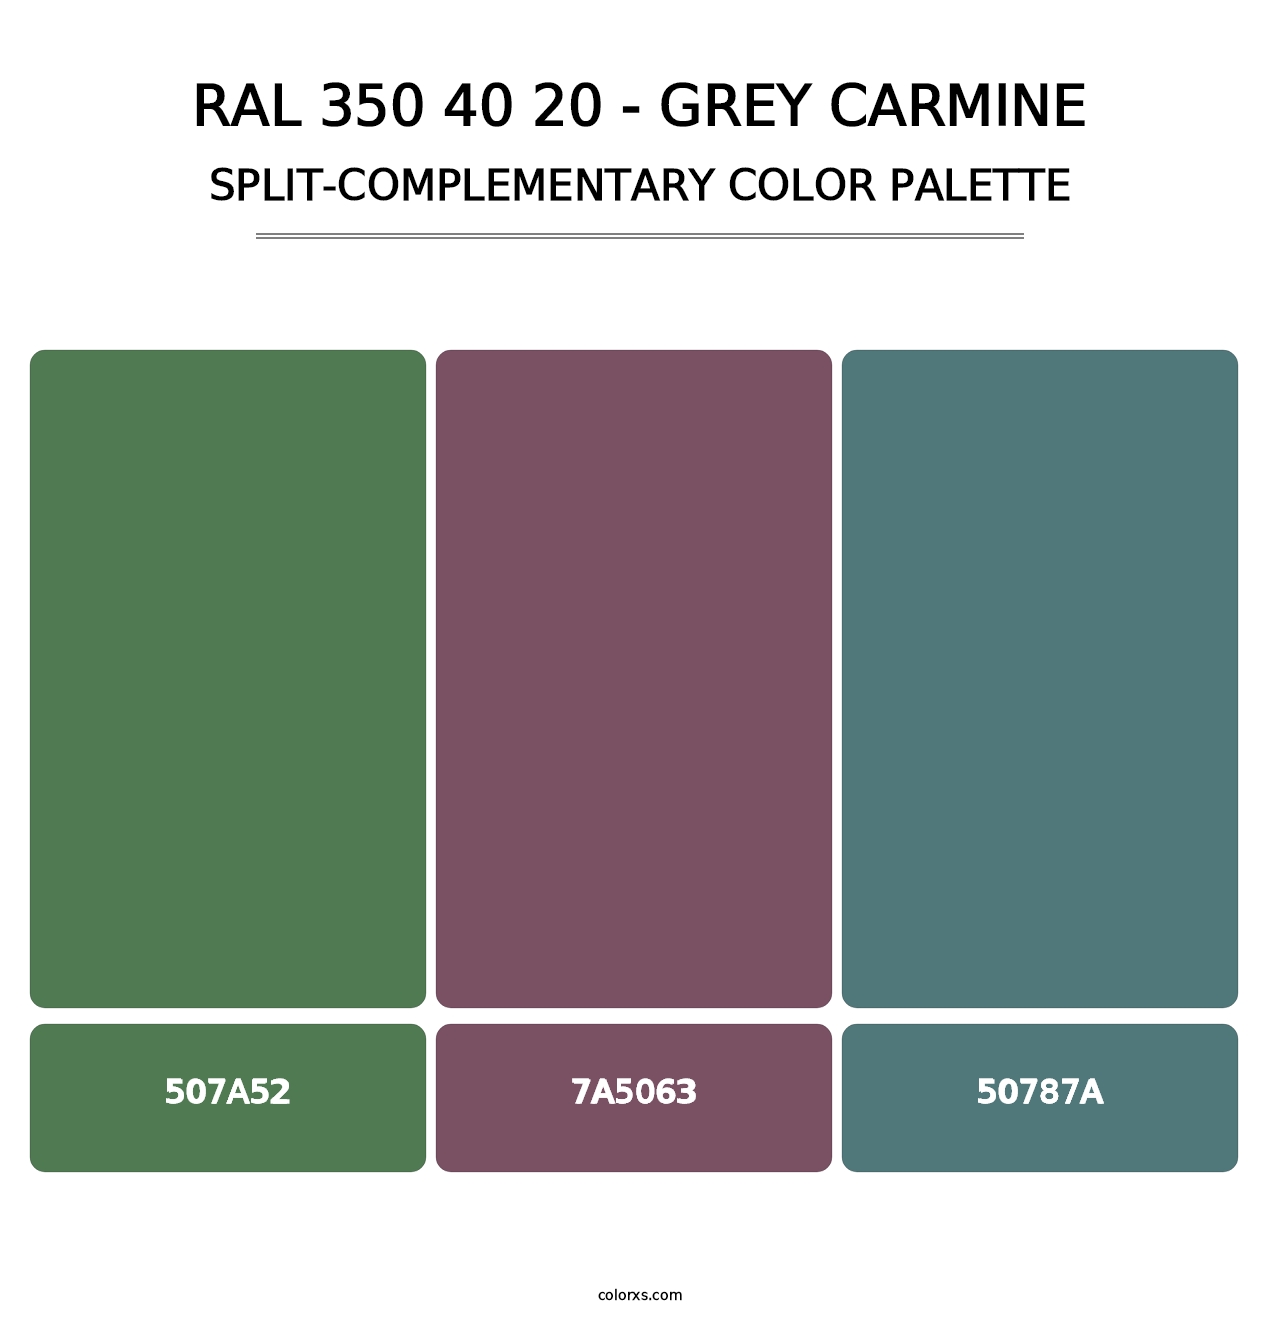 RAL 350 40 20 - Grey Carmine - Split-Complementary Color Palette